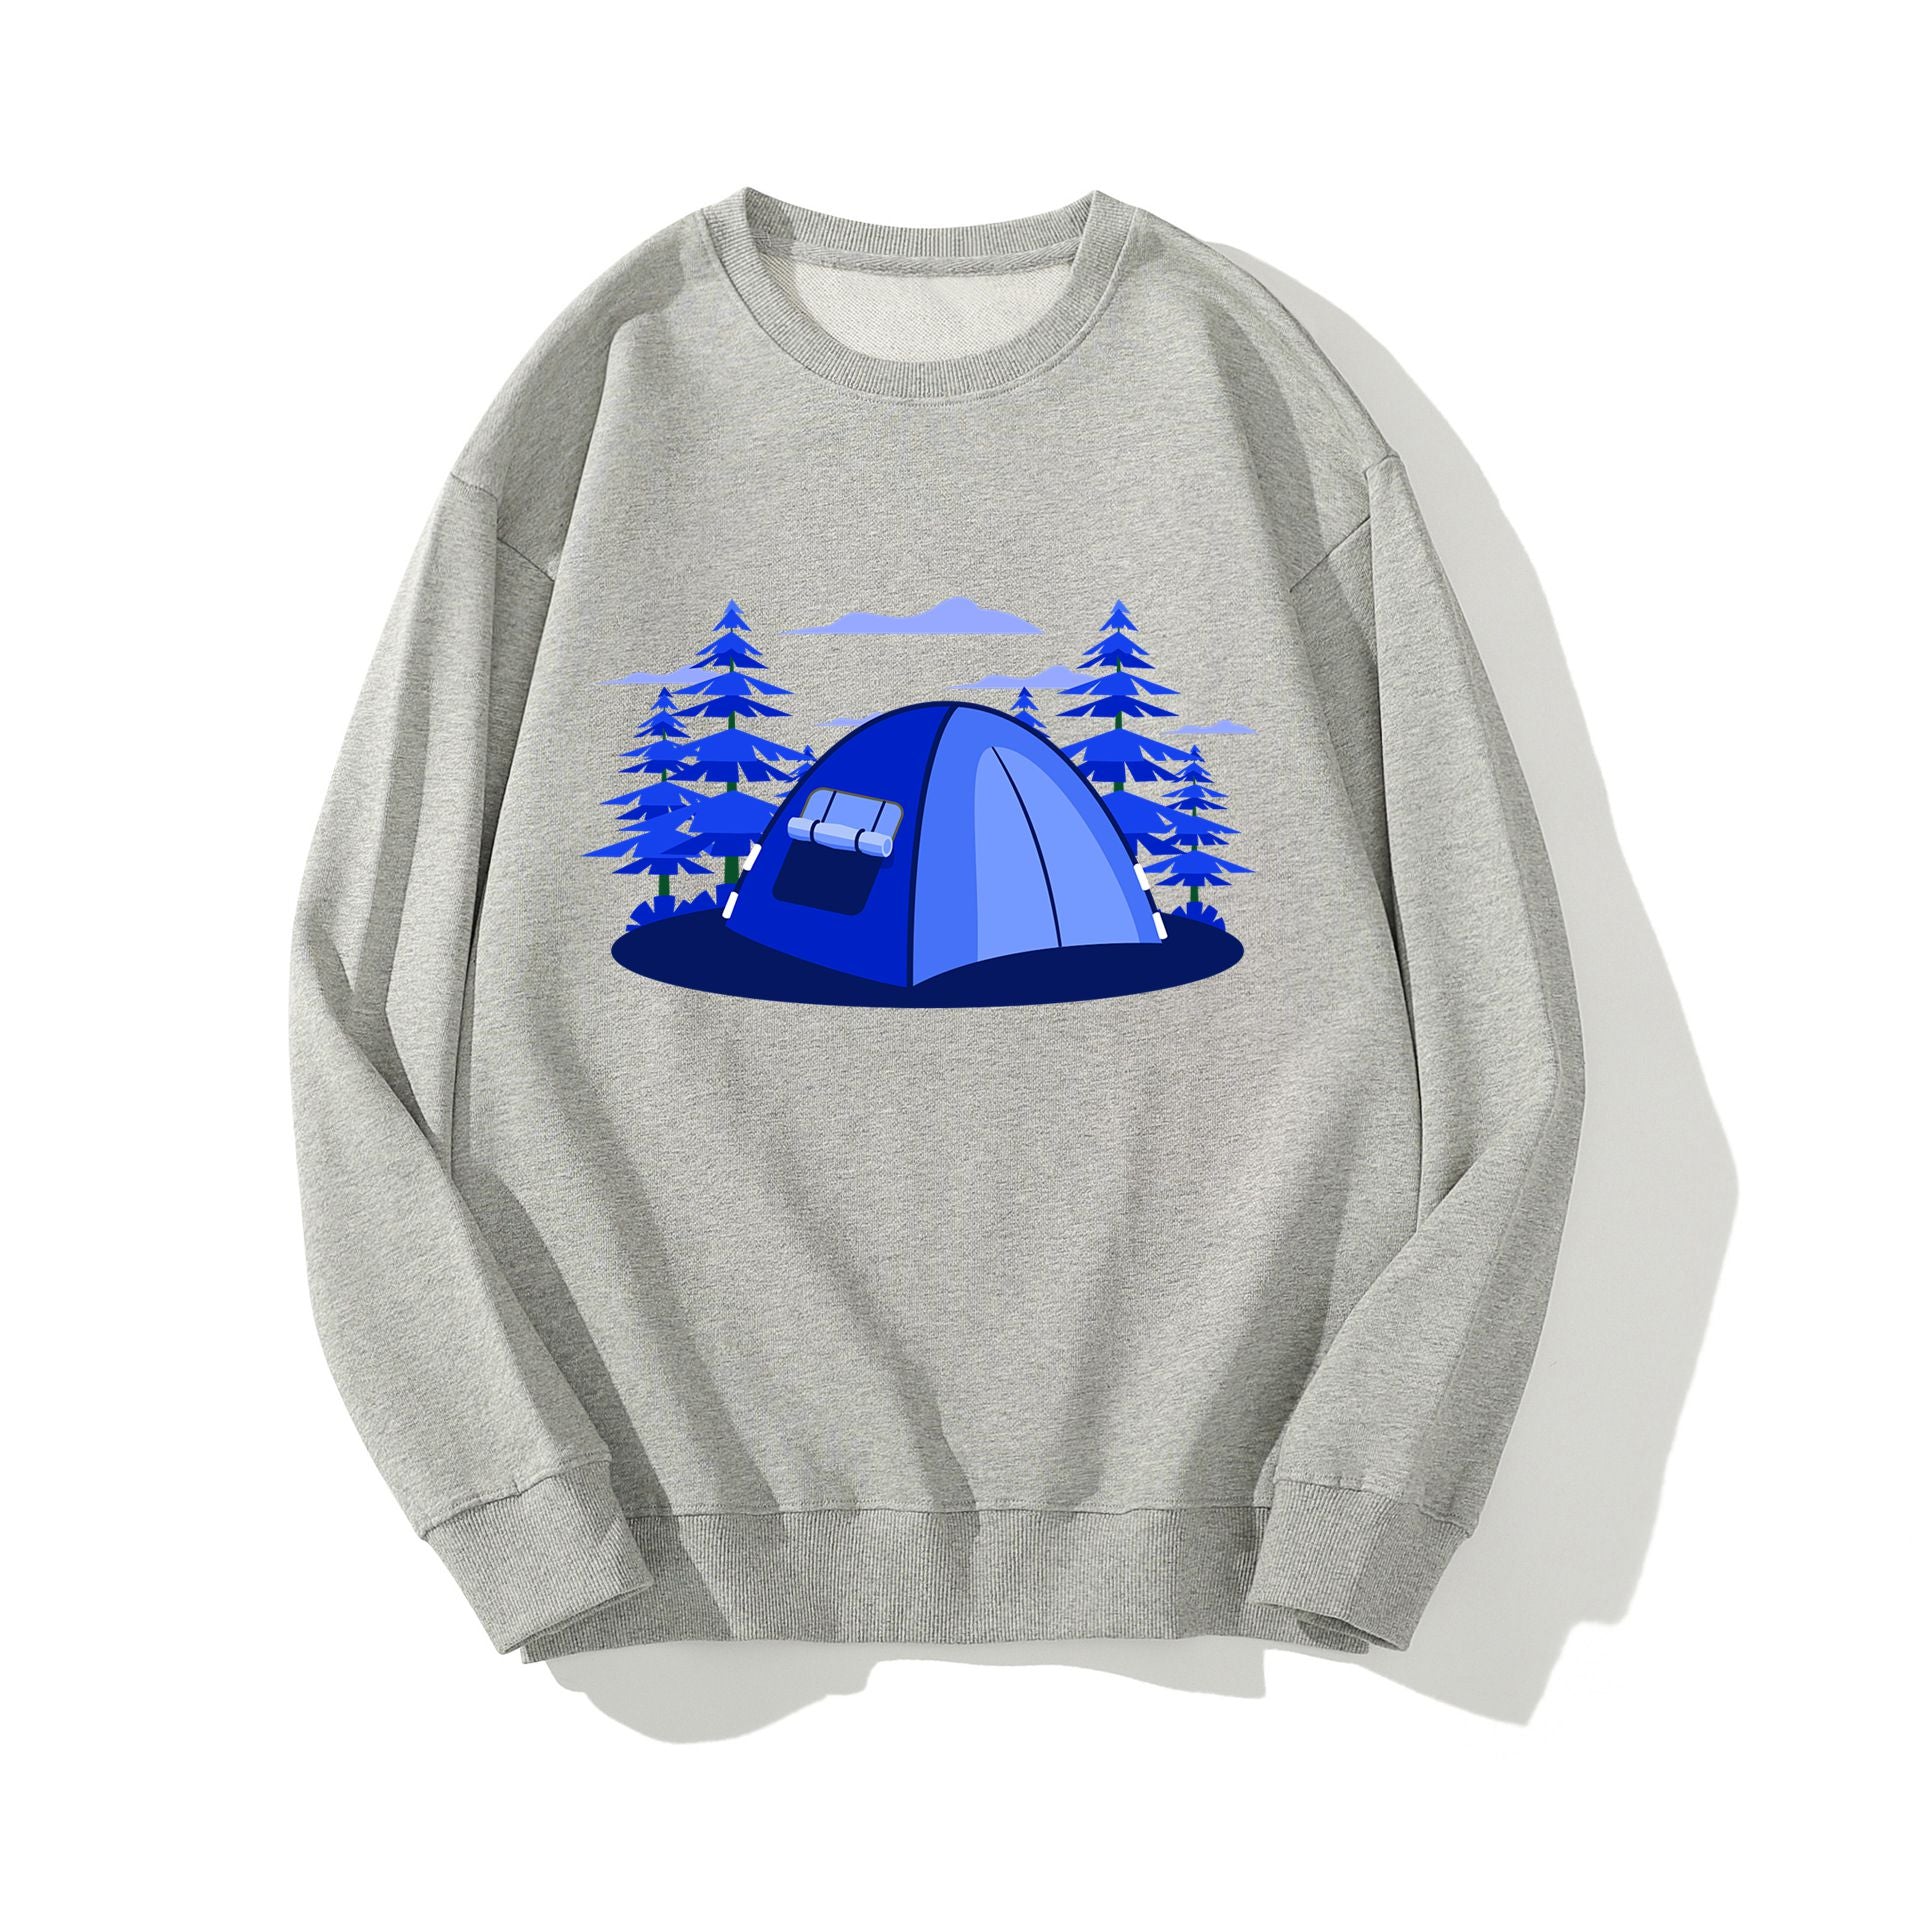 Camp Graphic Crew Neck Sweatshirt Cotton Sweater Winter Tops